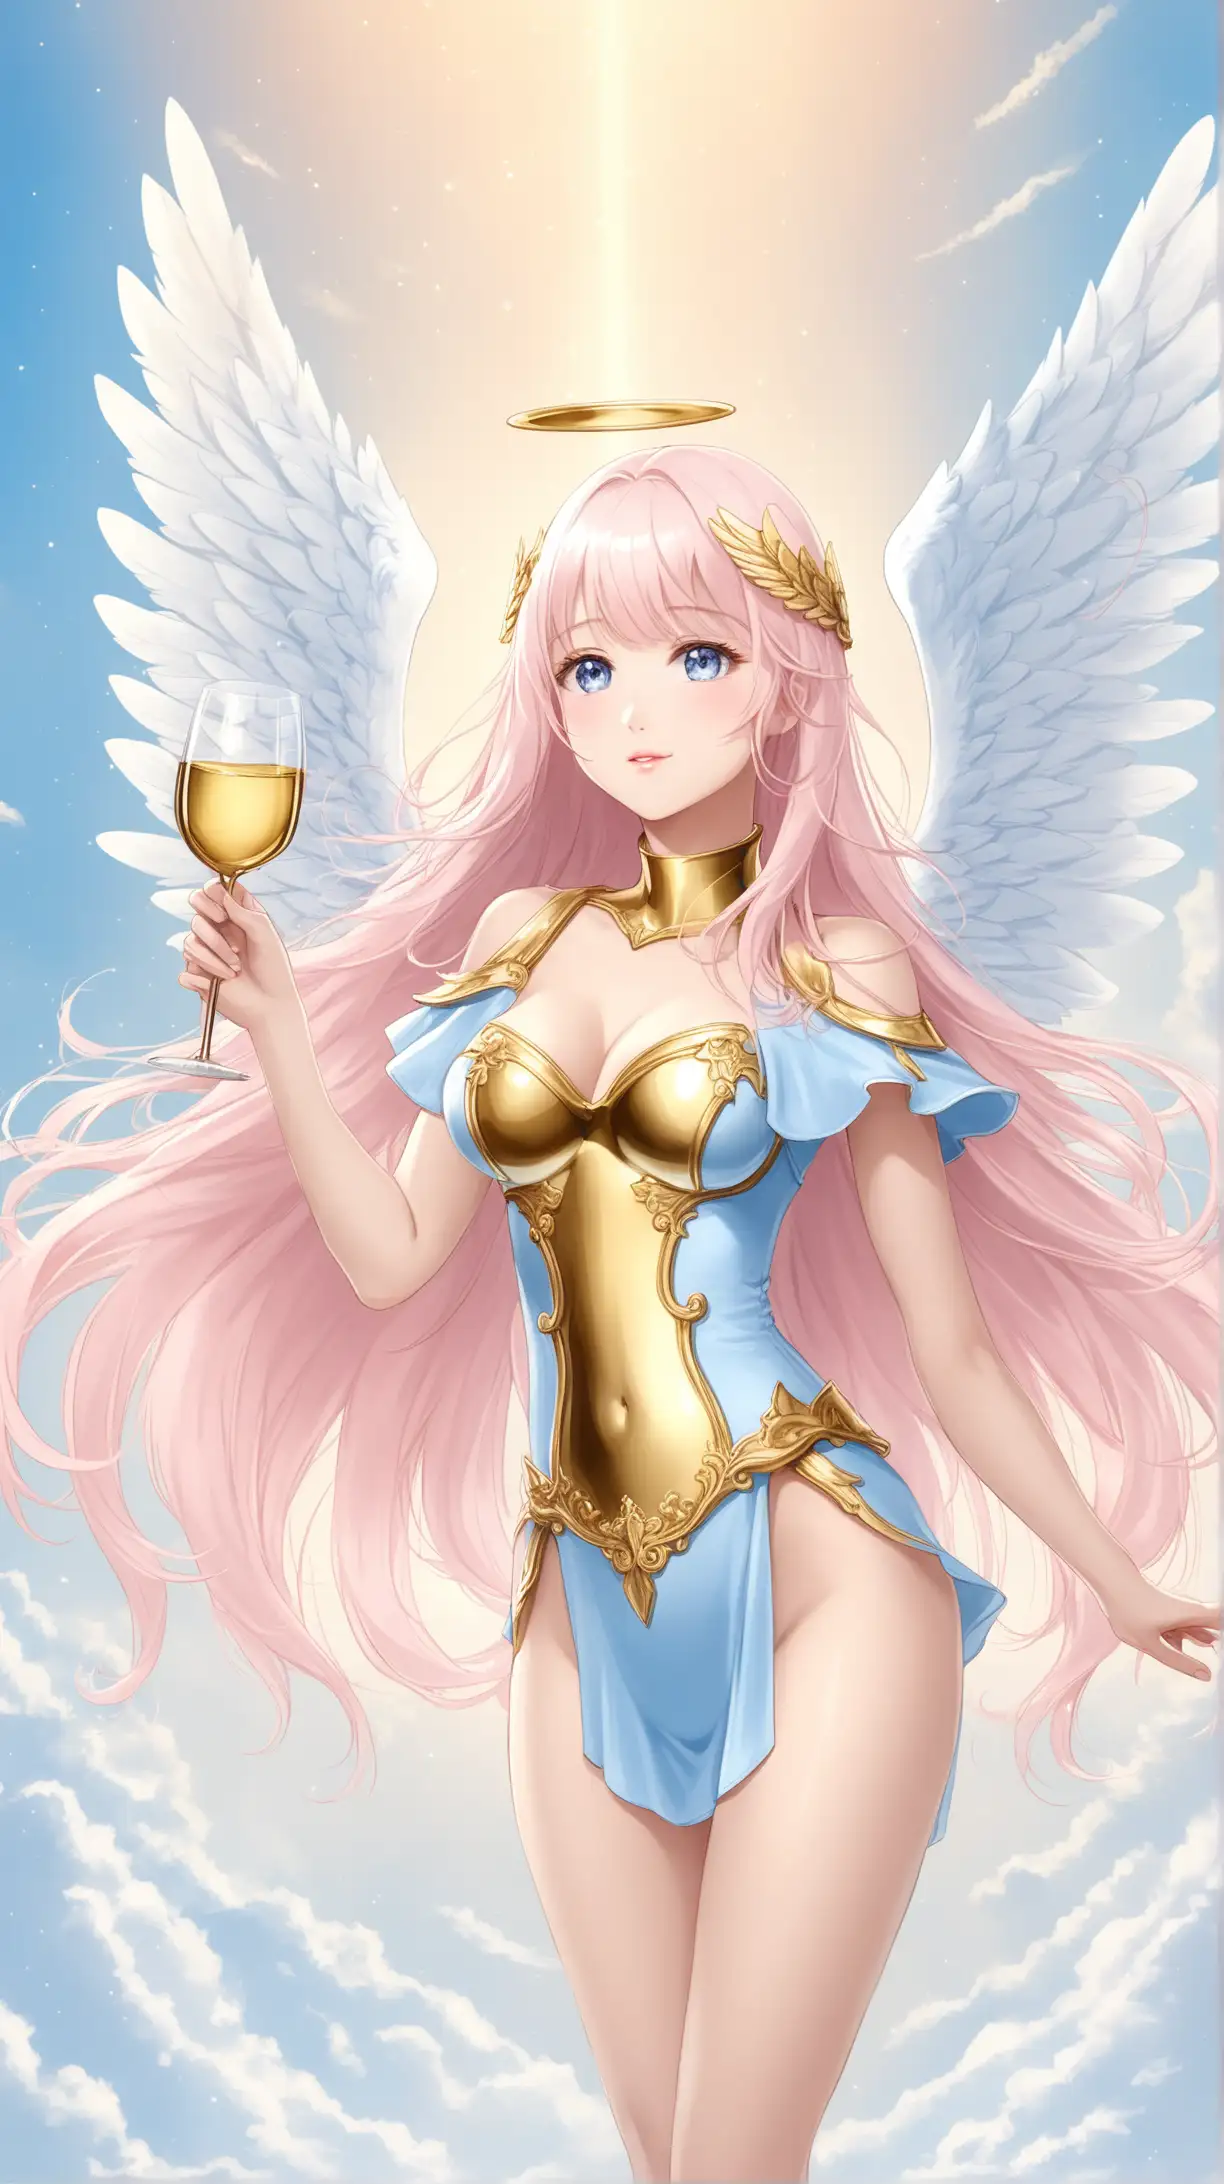 Sexy girl carry gold wine glass, light blue angel costume, white wing, light pink long hair, medium short, heaven background.